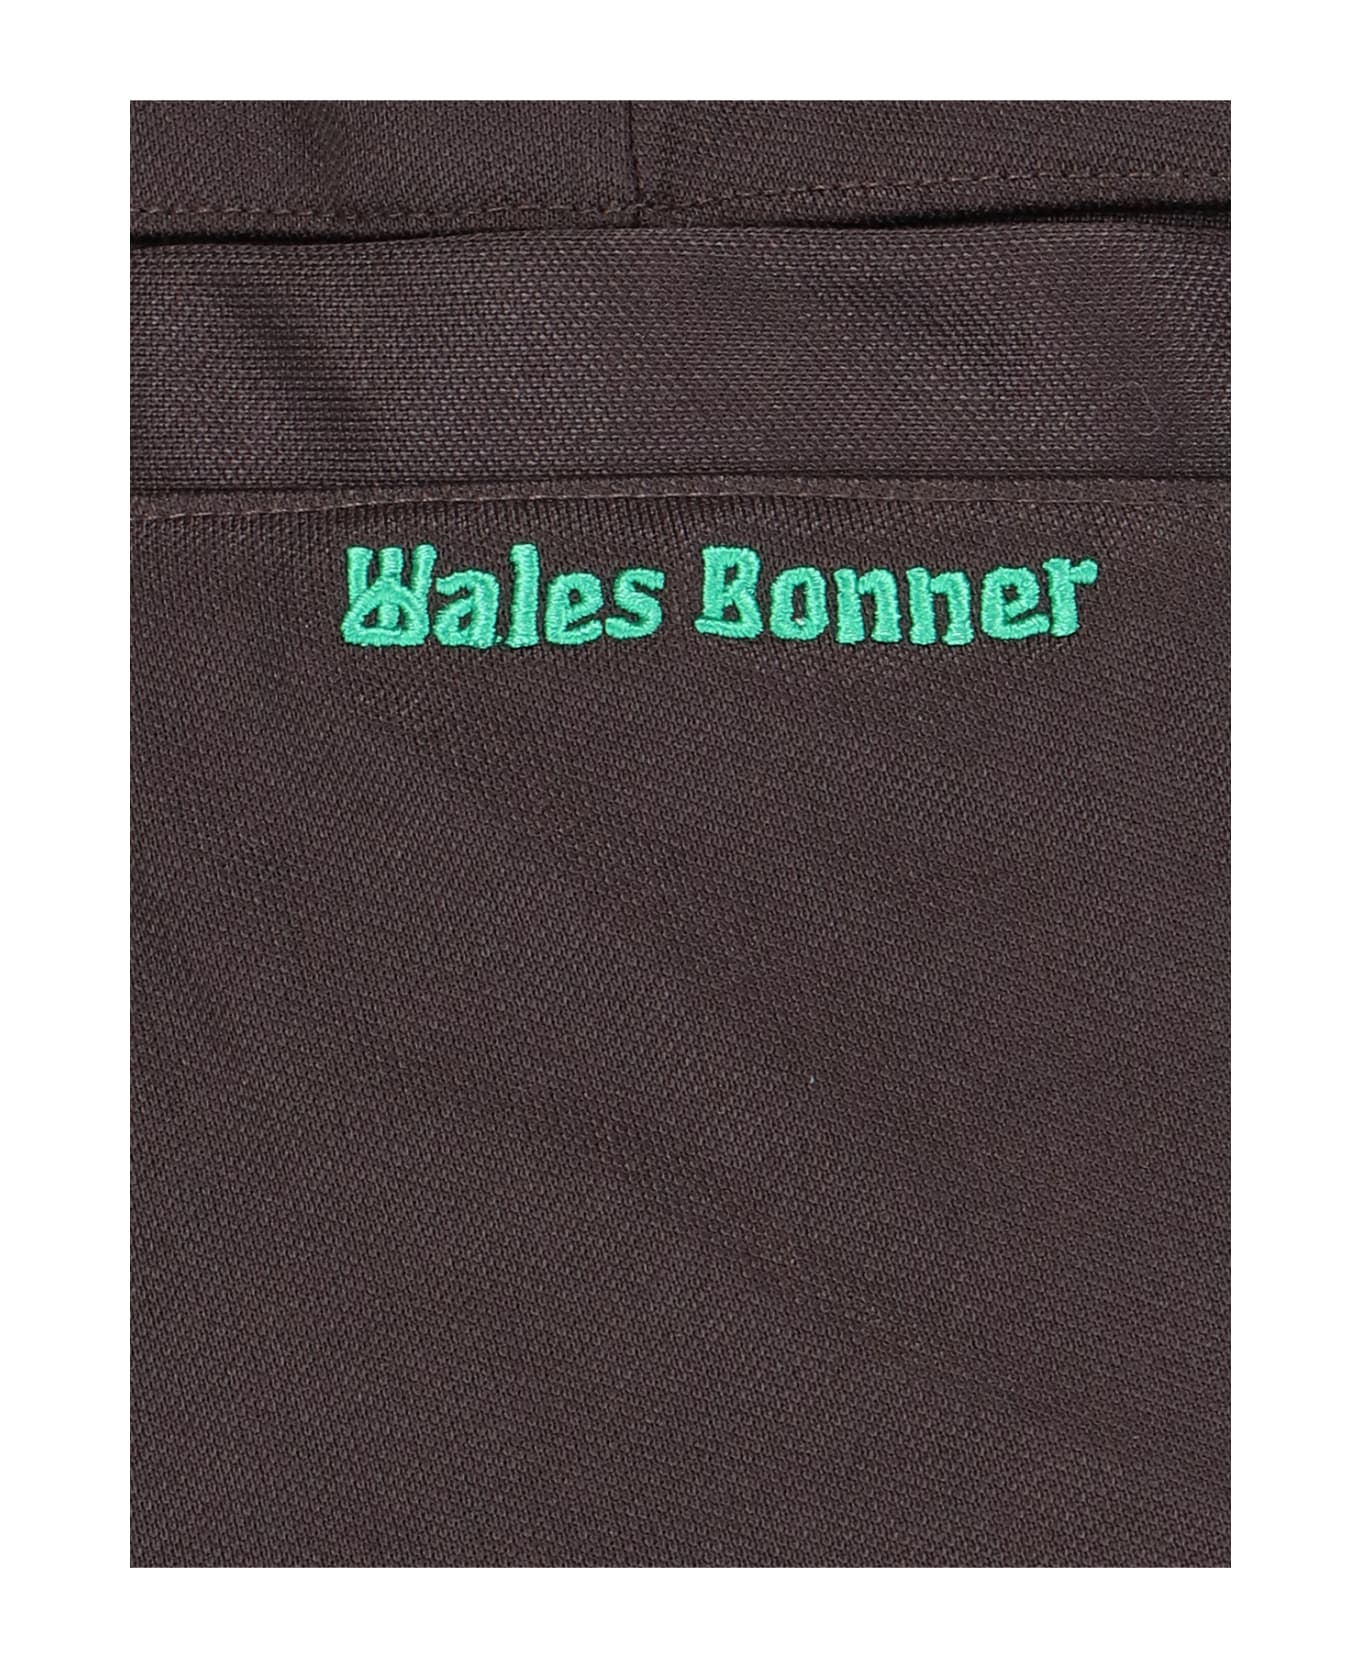 Adidas Originals by Wales Bonner Pants - Brown